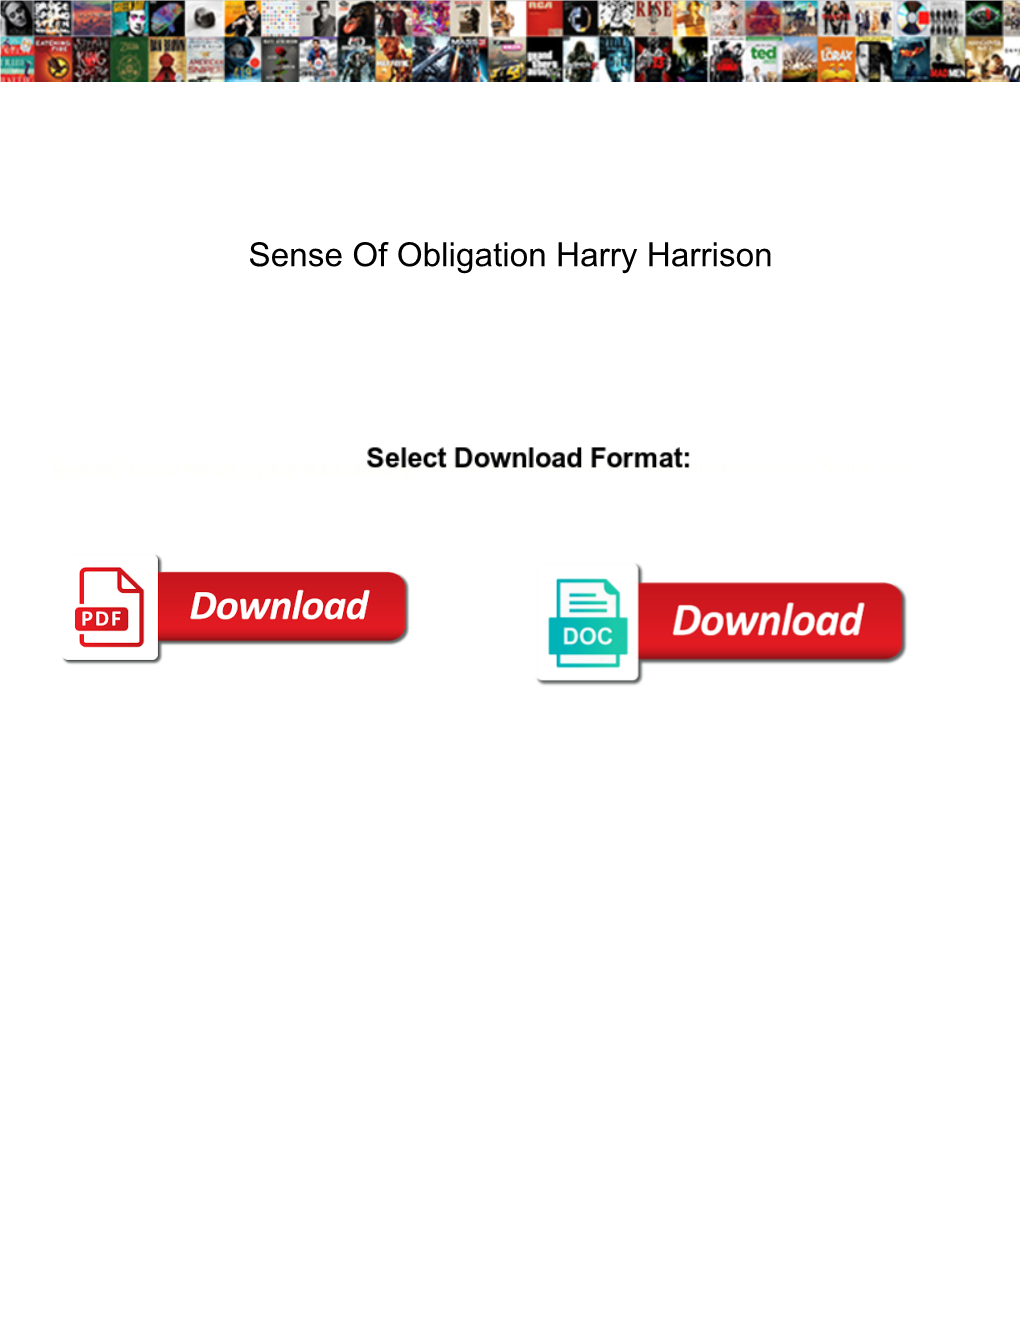 Sense of Obligation Harry Harrison